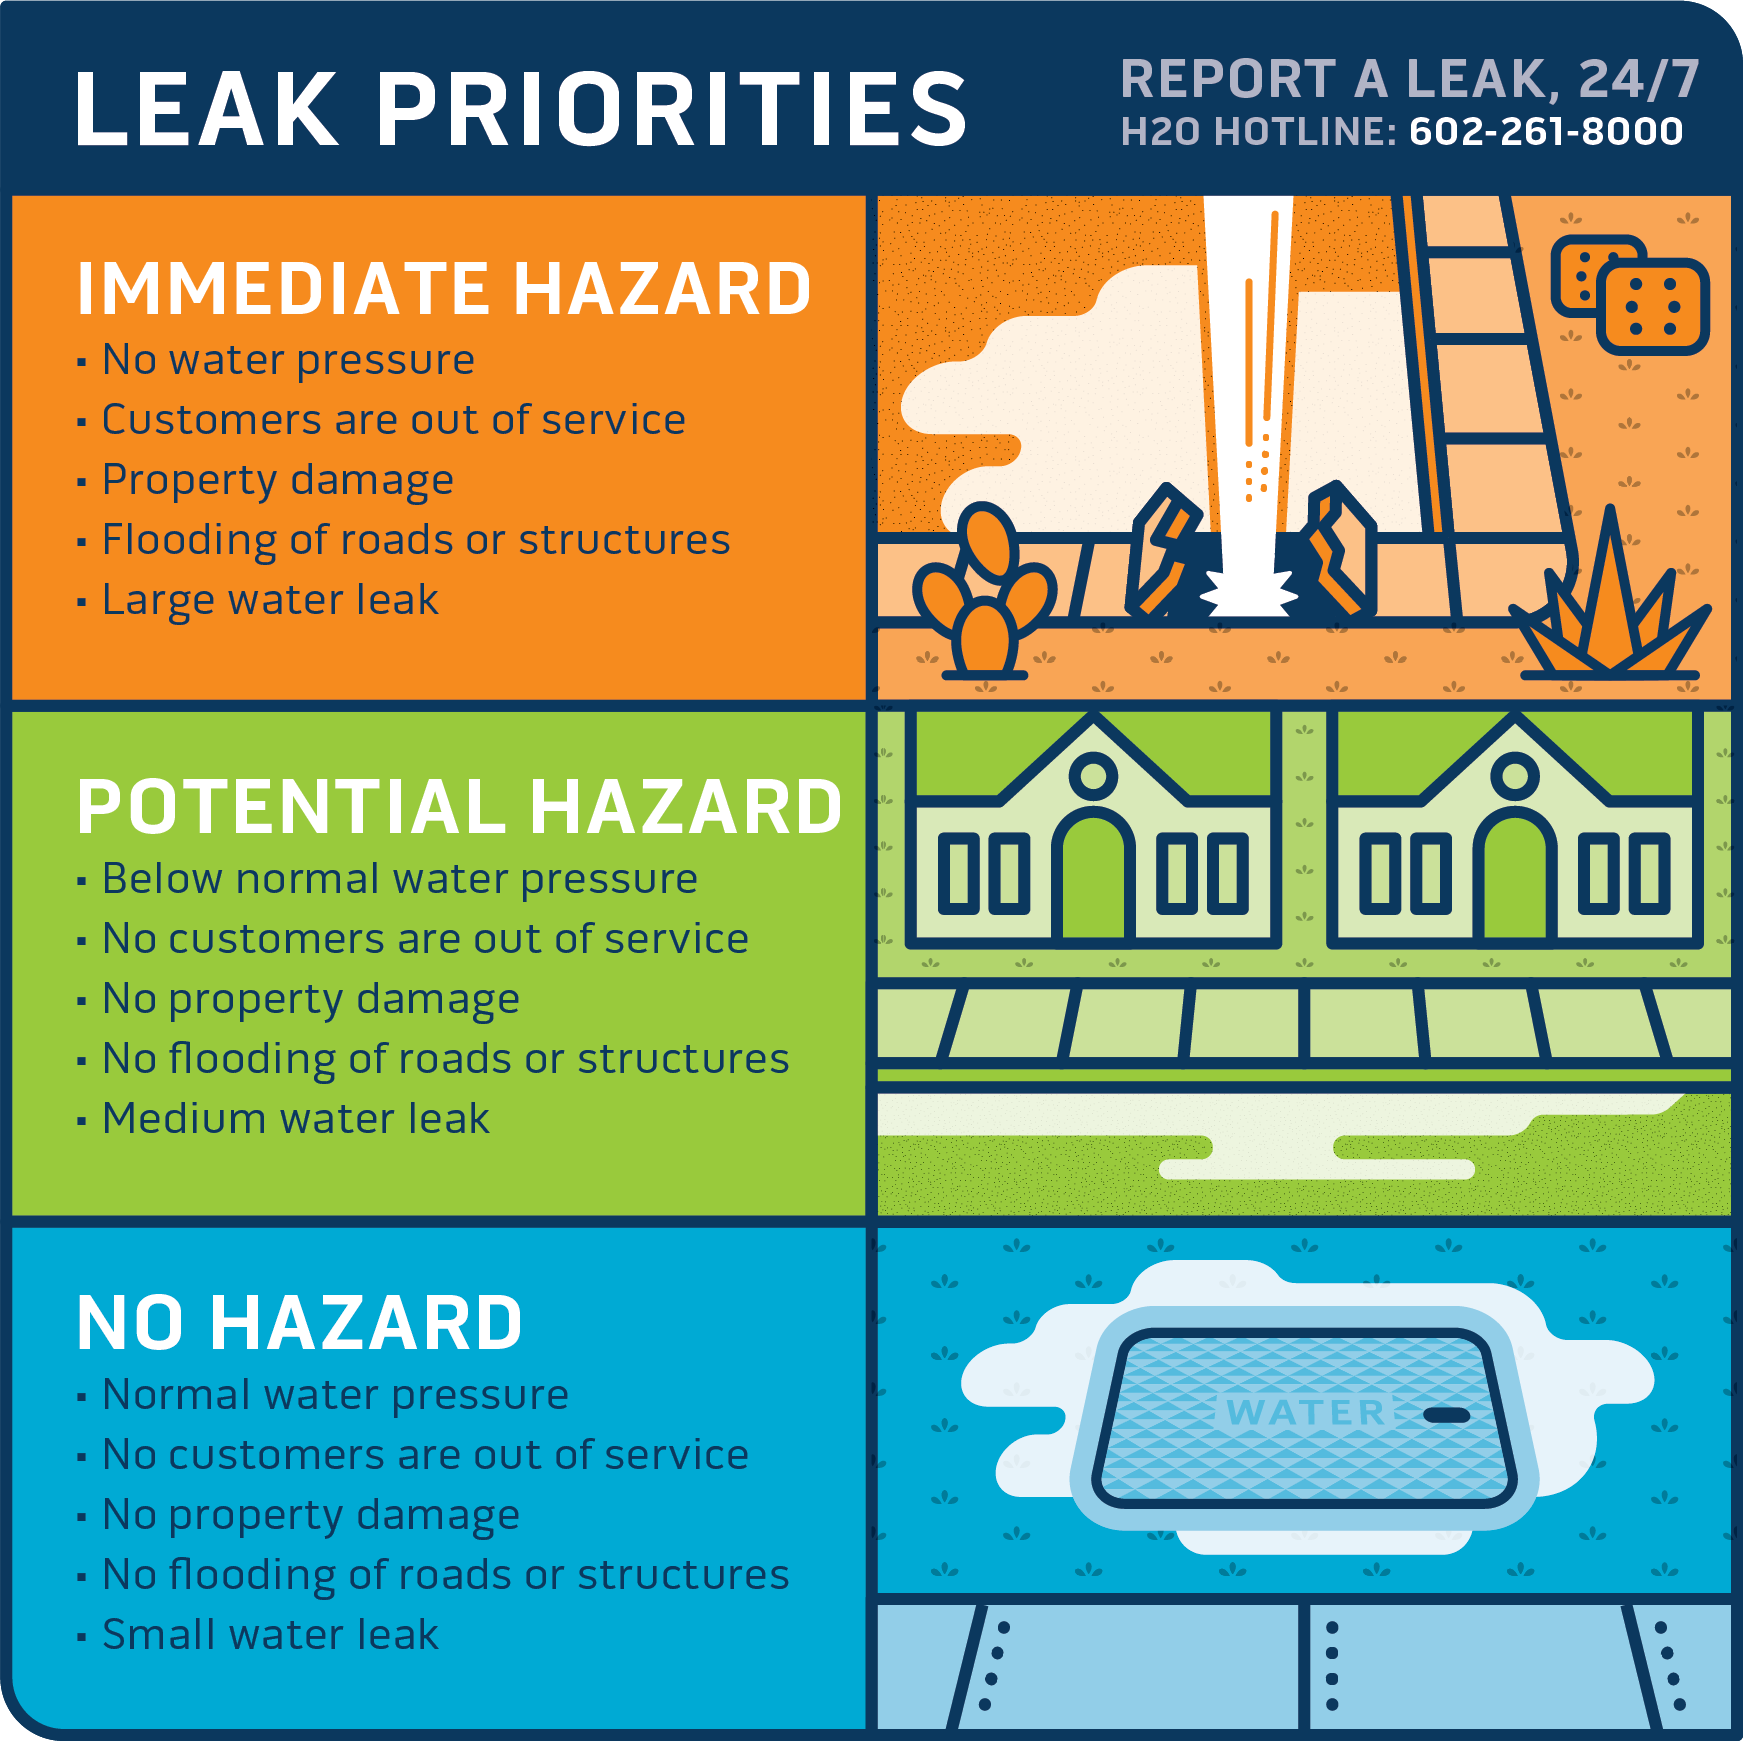 Leak Priorities infographic